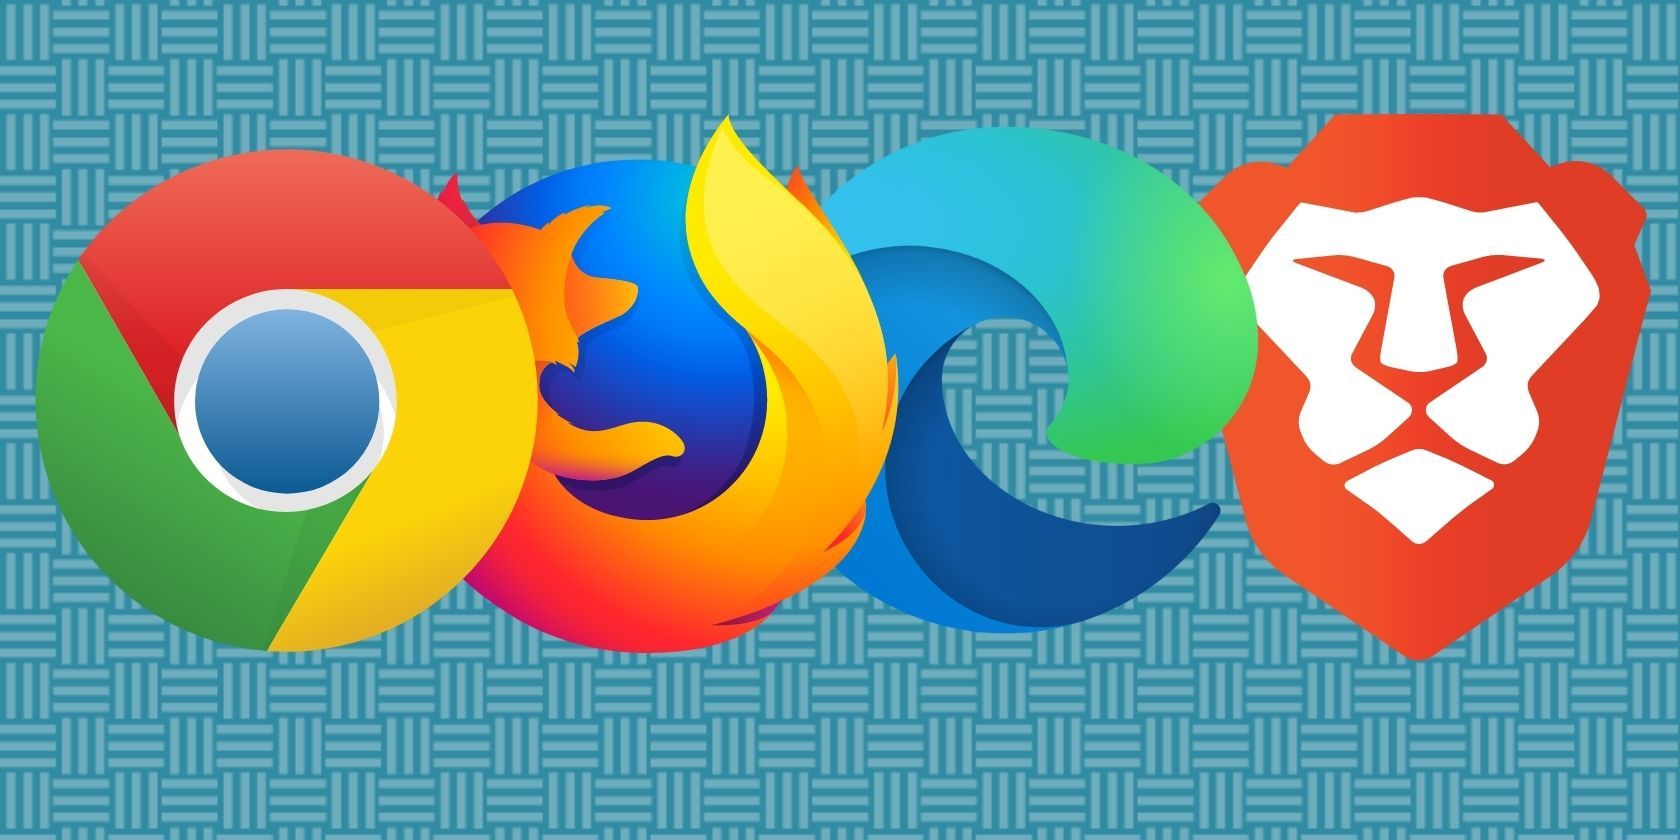 ChromeFirefox, Edge y Brave logotipos.